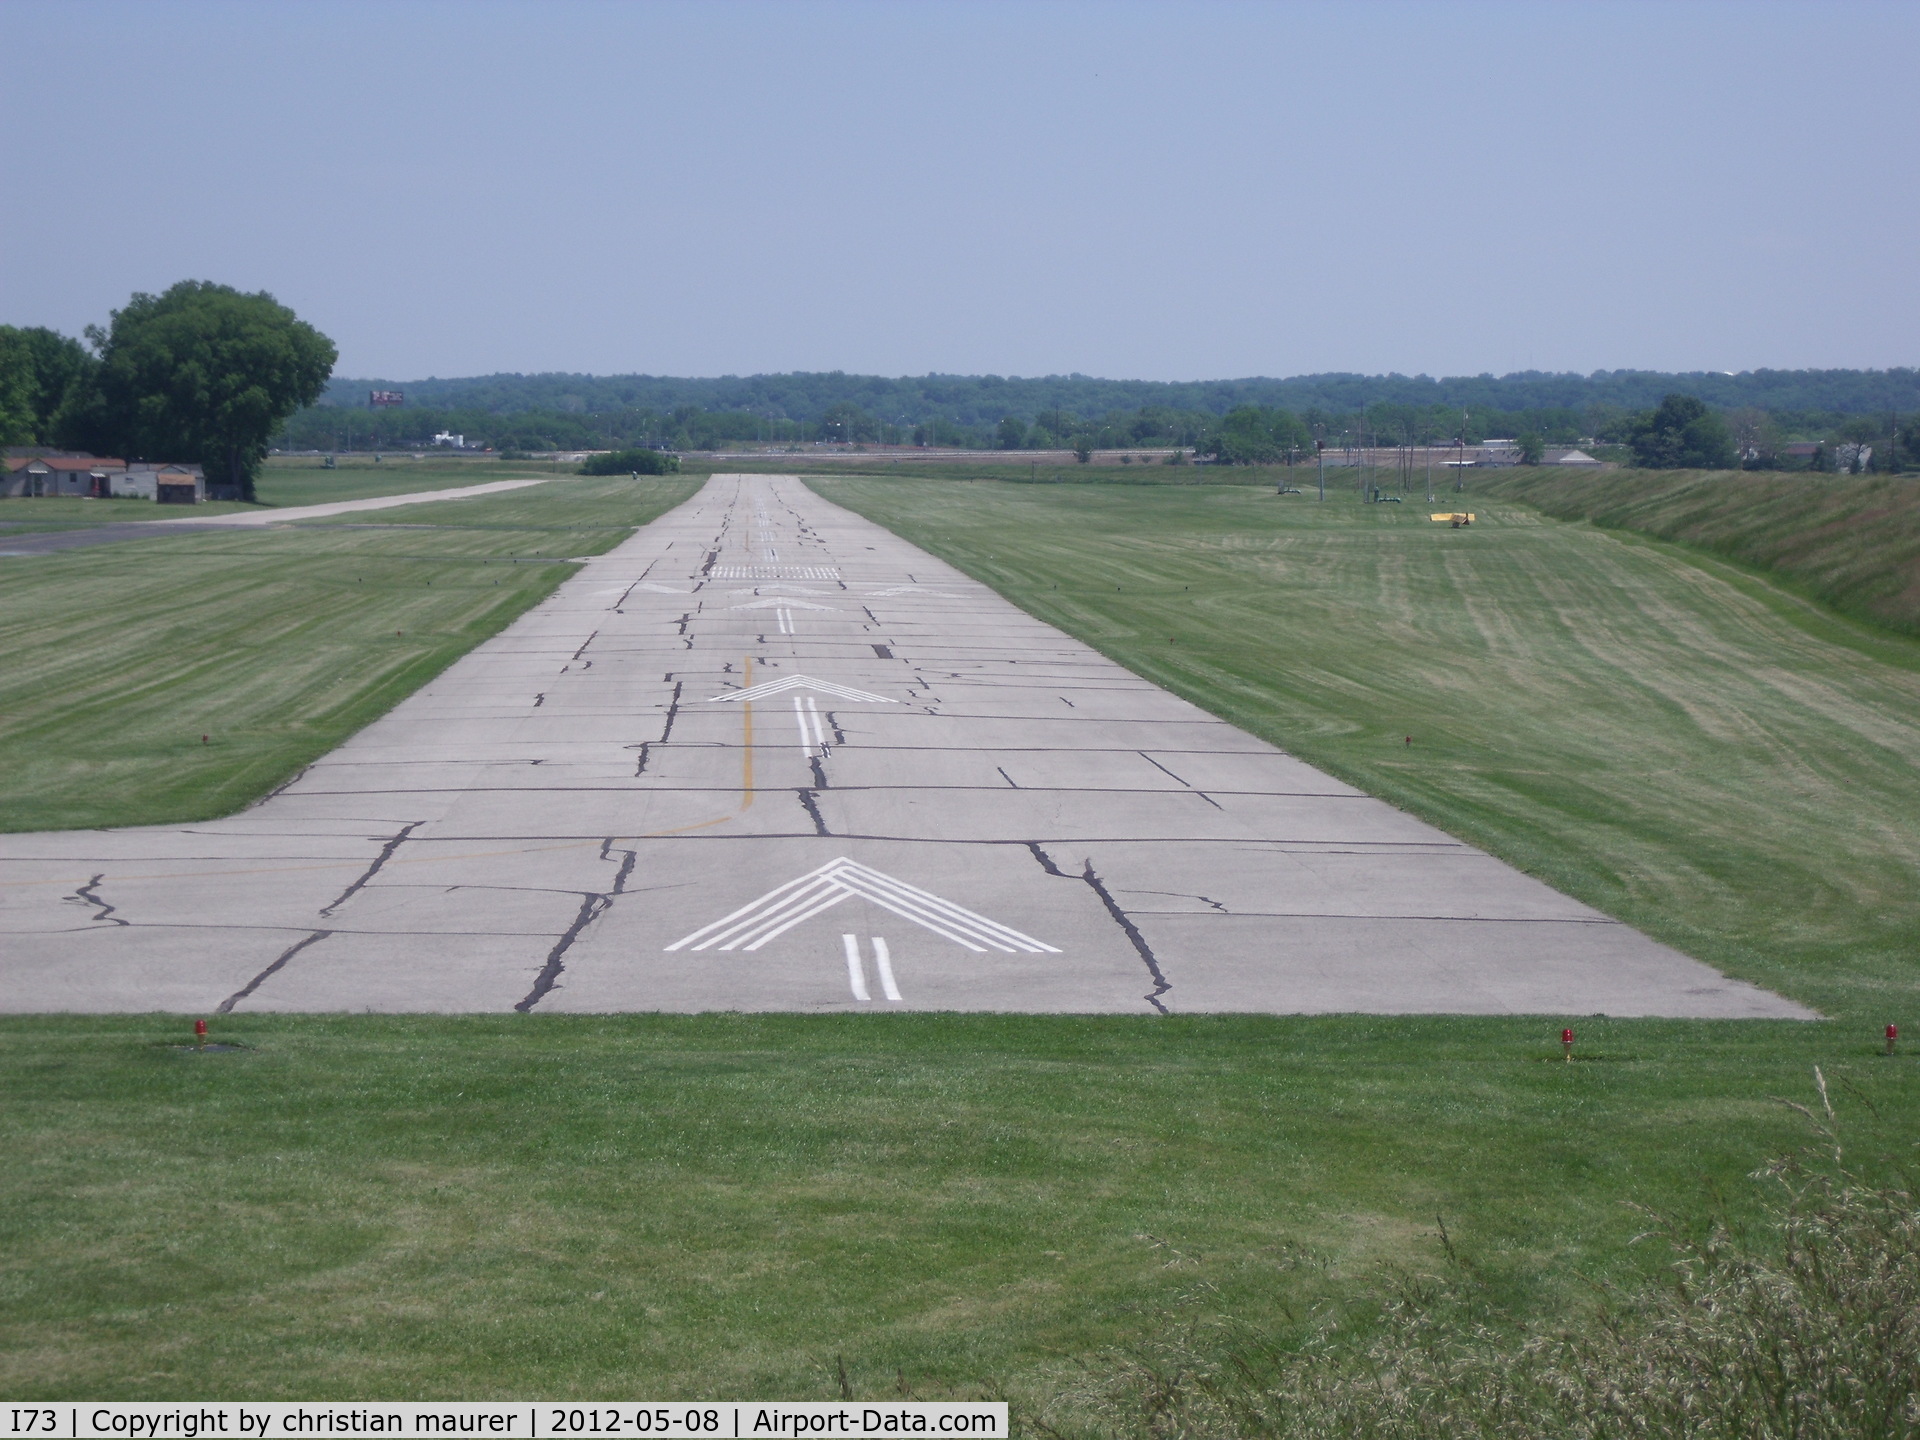 Moraine Air Park Airport (I73) - the runway